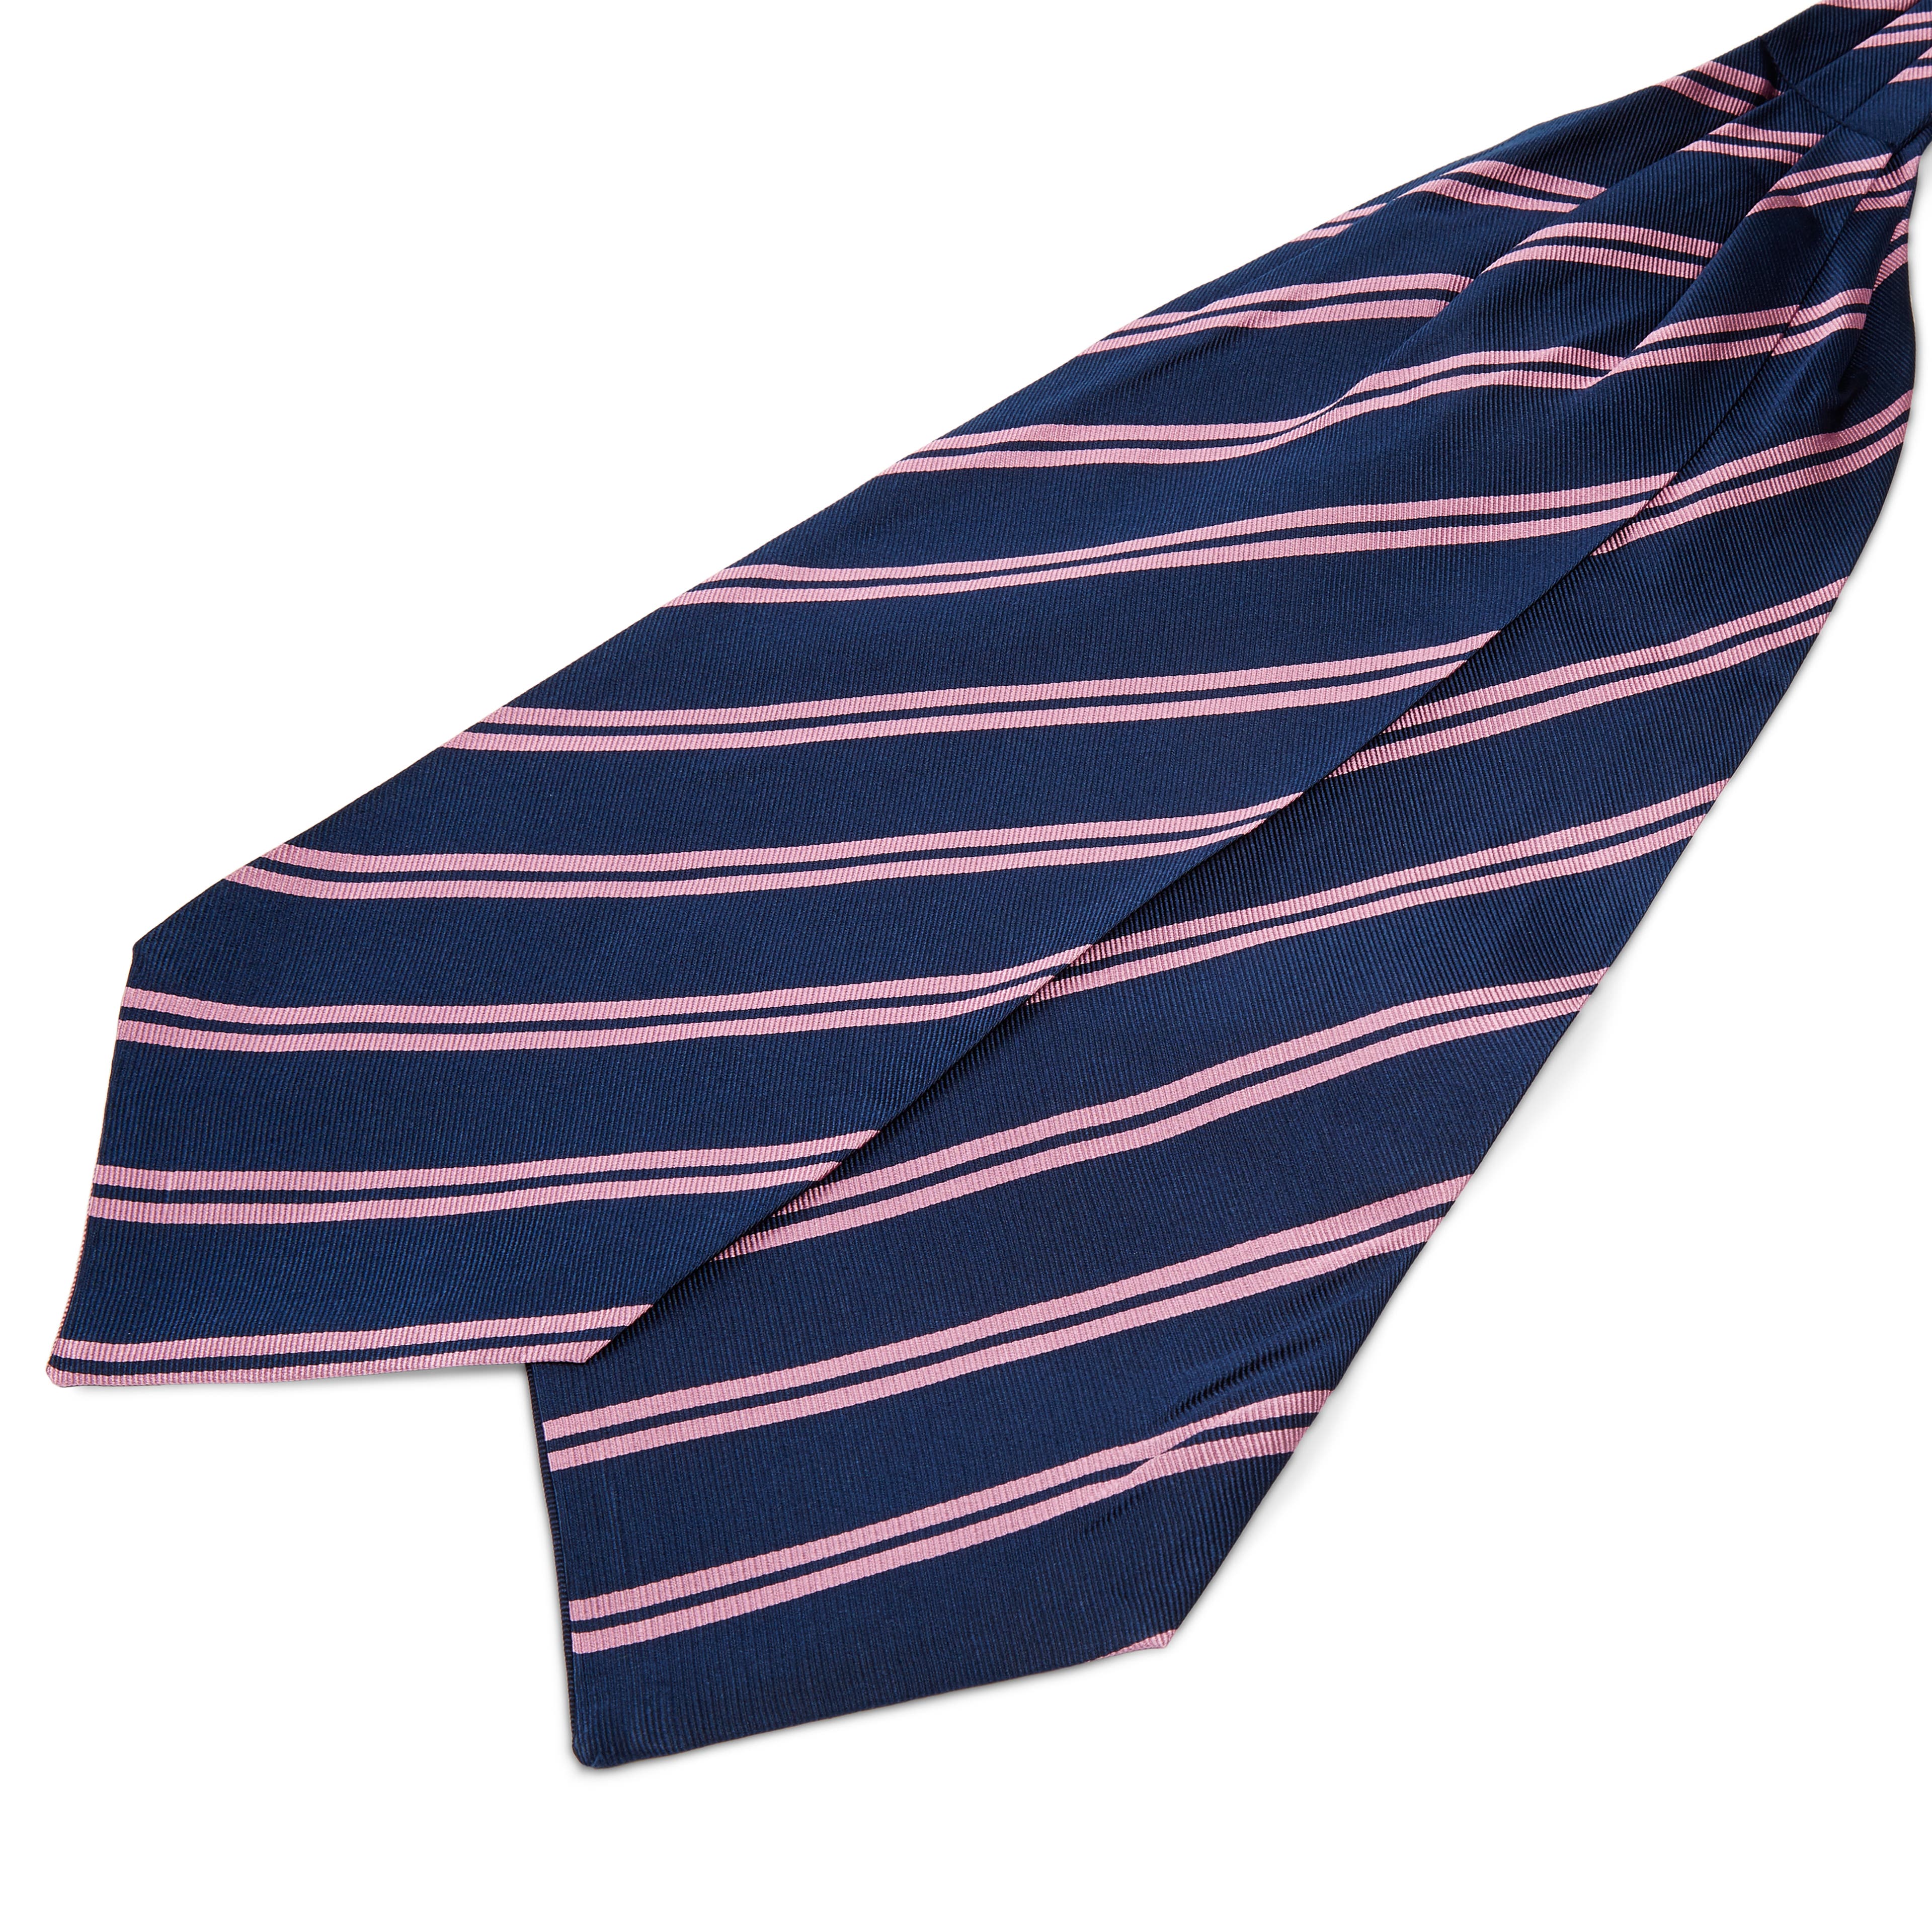 Cravate Ascot en soie bleu marine à rayures roses